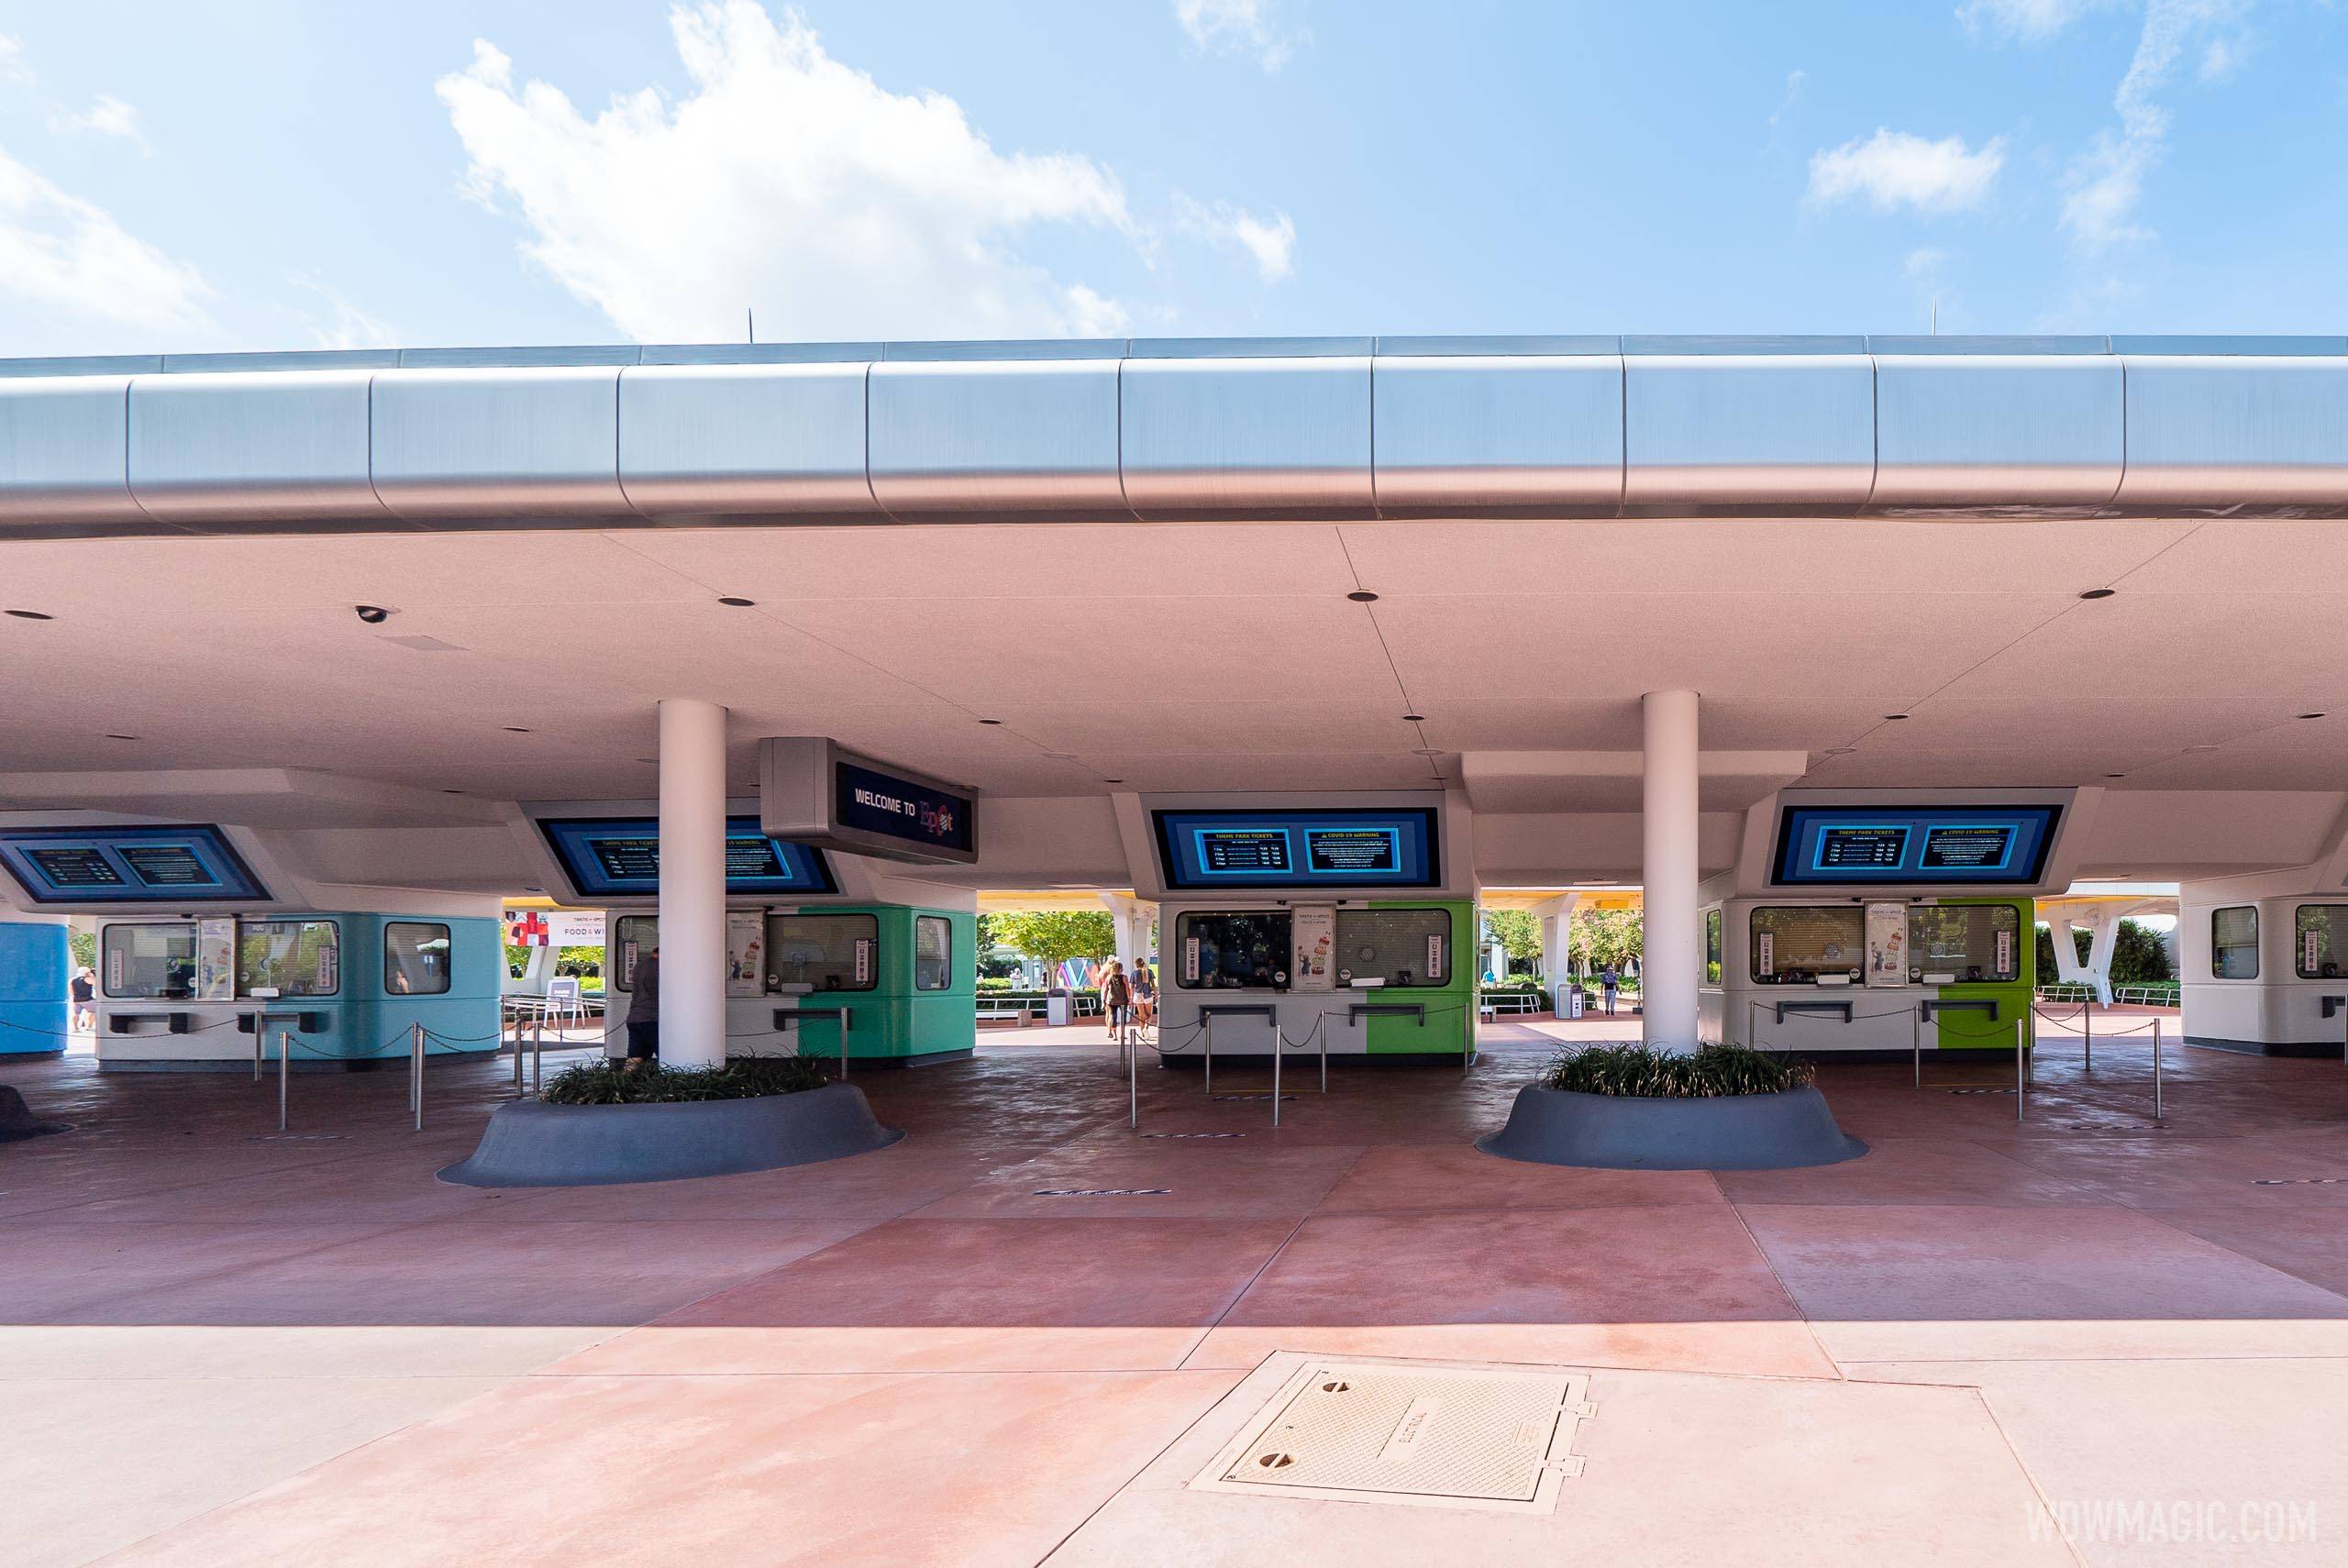 PHOTOS - New color scheme for EPCOT's main entrance ticket plaza